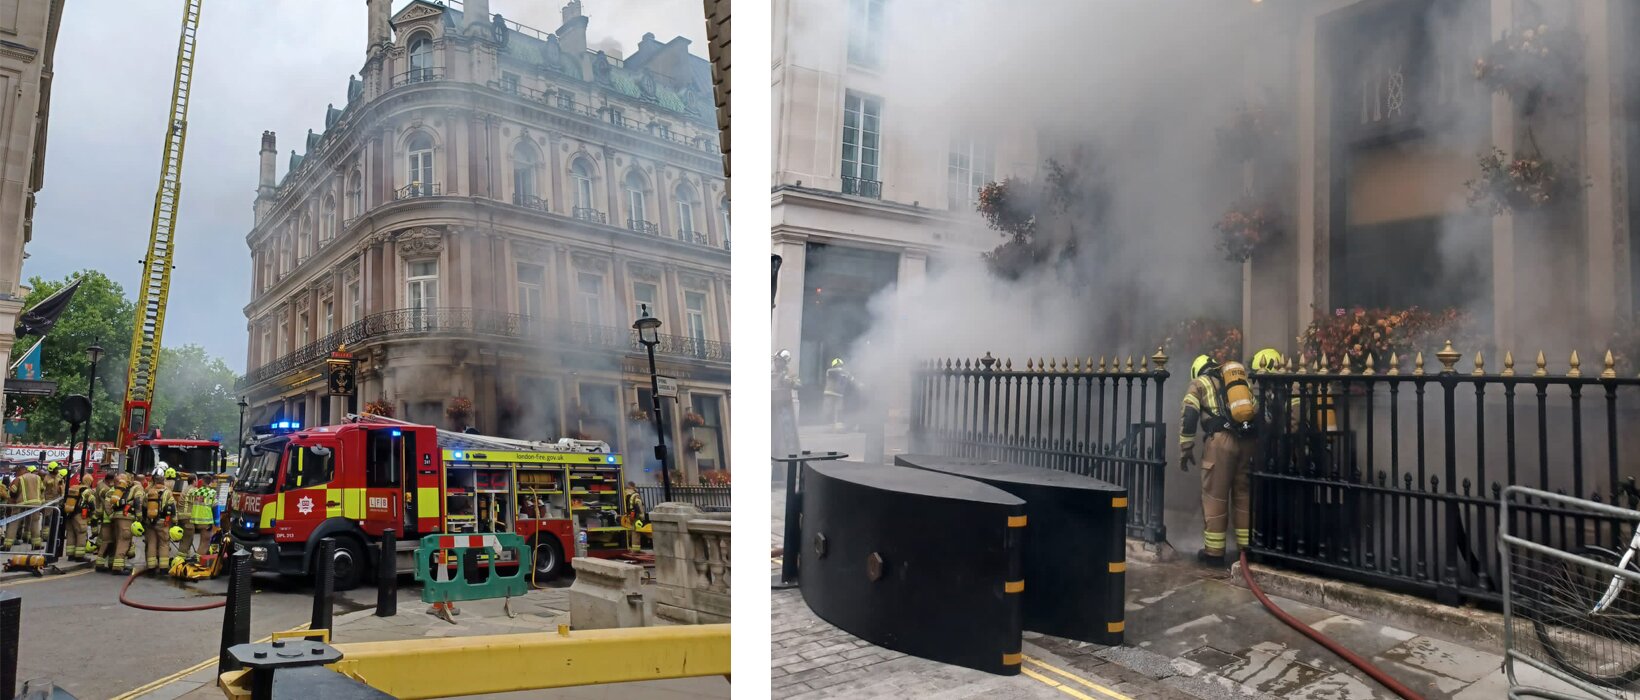 Trafalgar Square pub fire under investigation